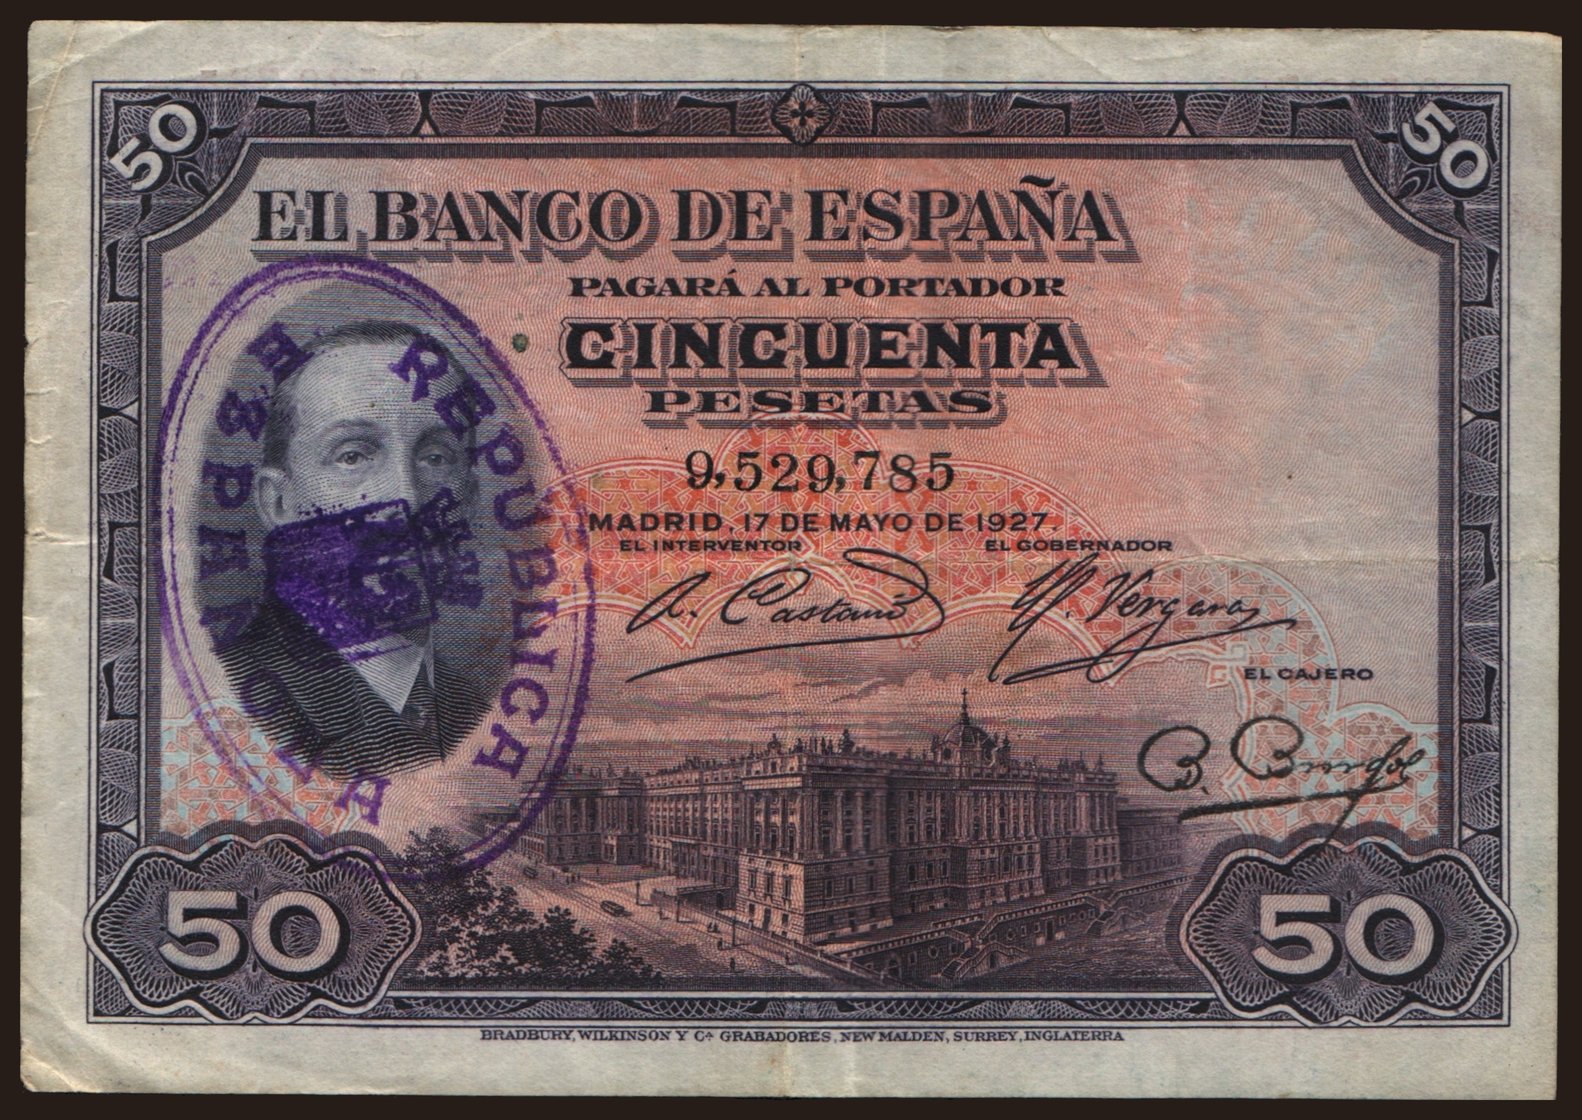 50 pesetas, 1927